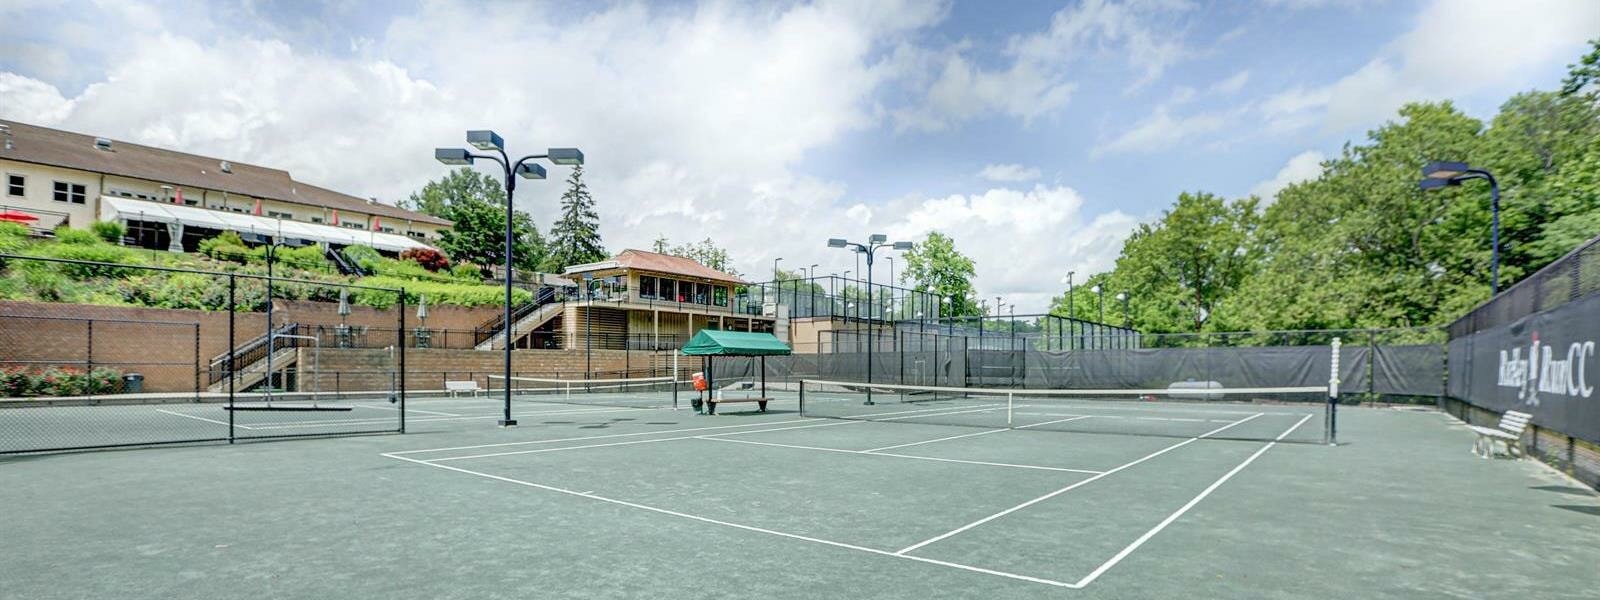 Tennis_Facility_%283%29